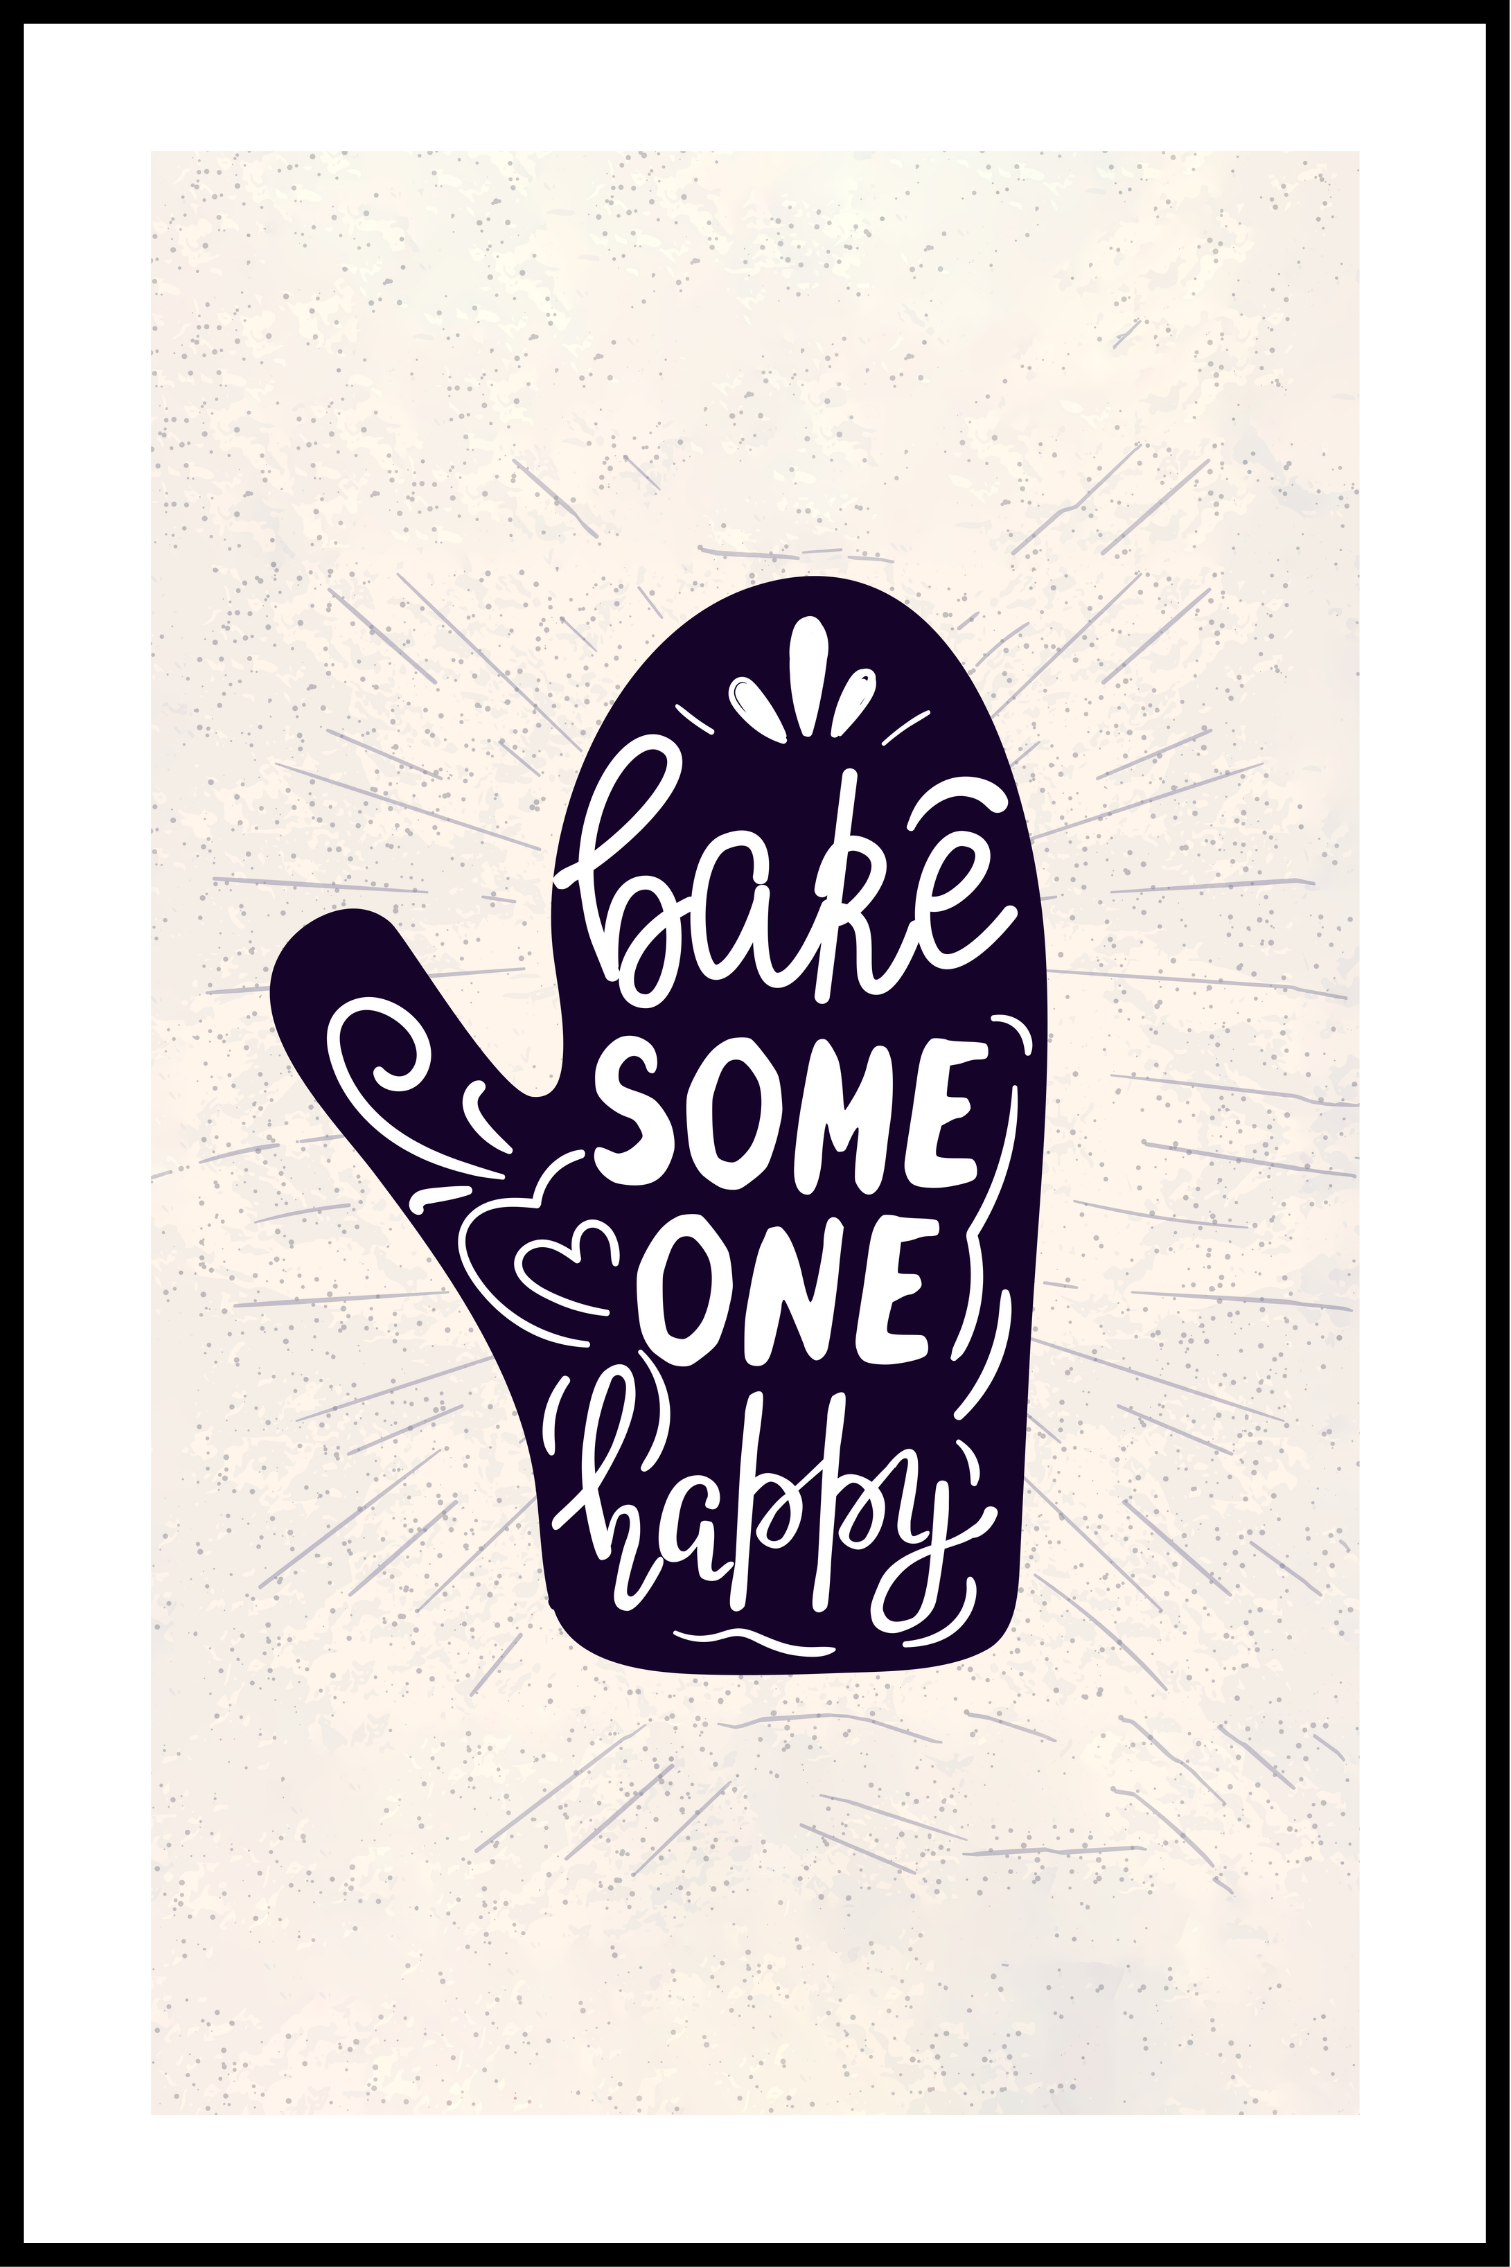 Bake someone happy plakat